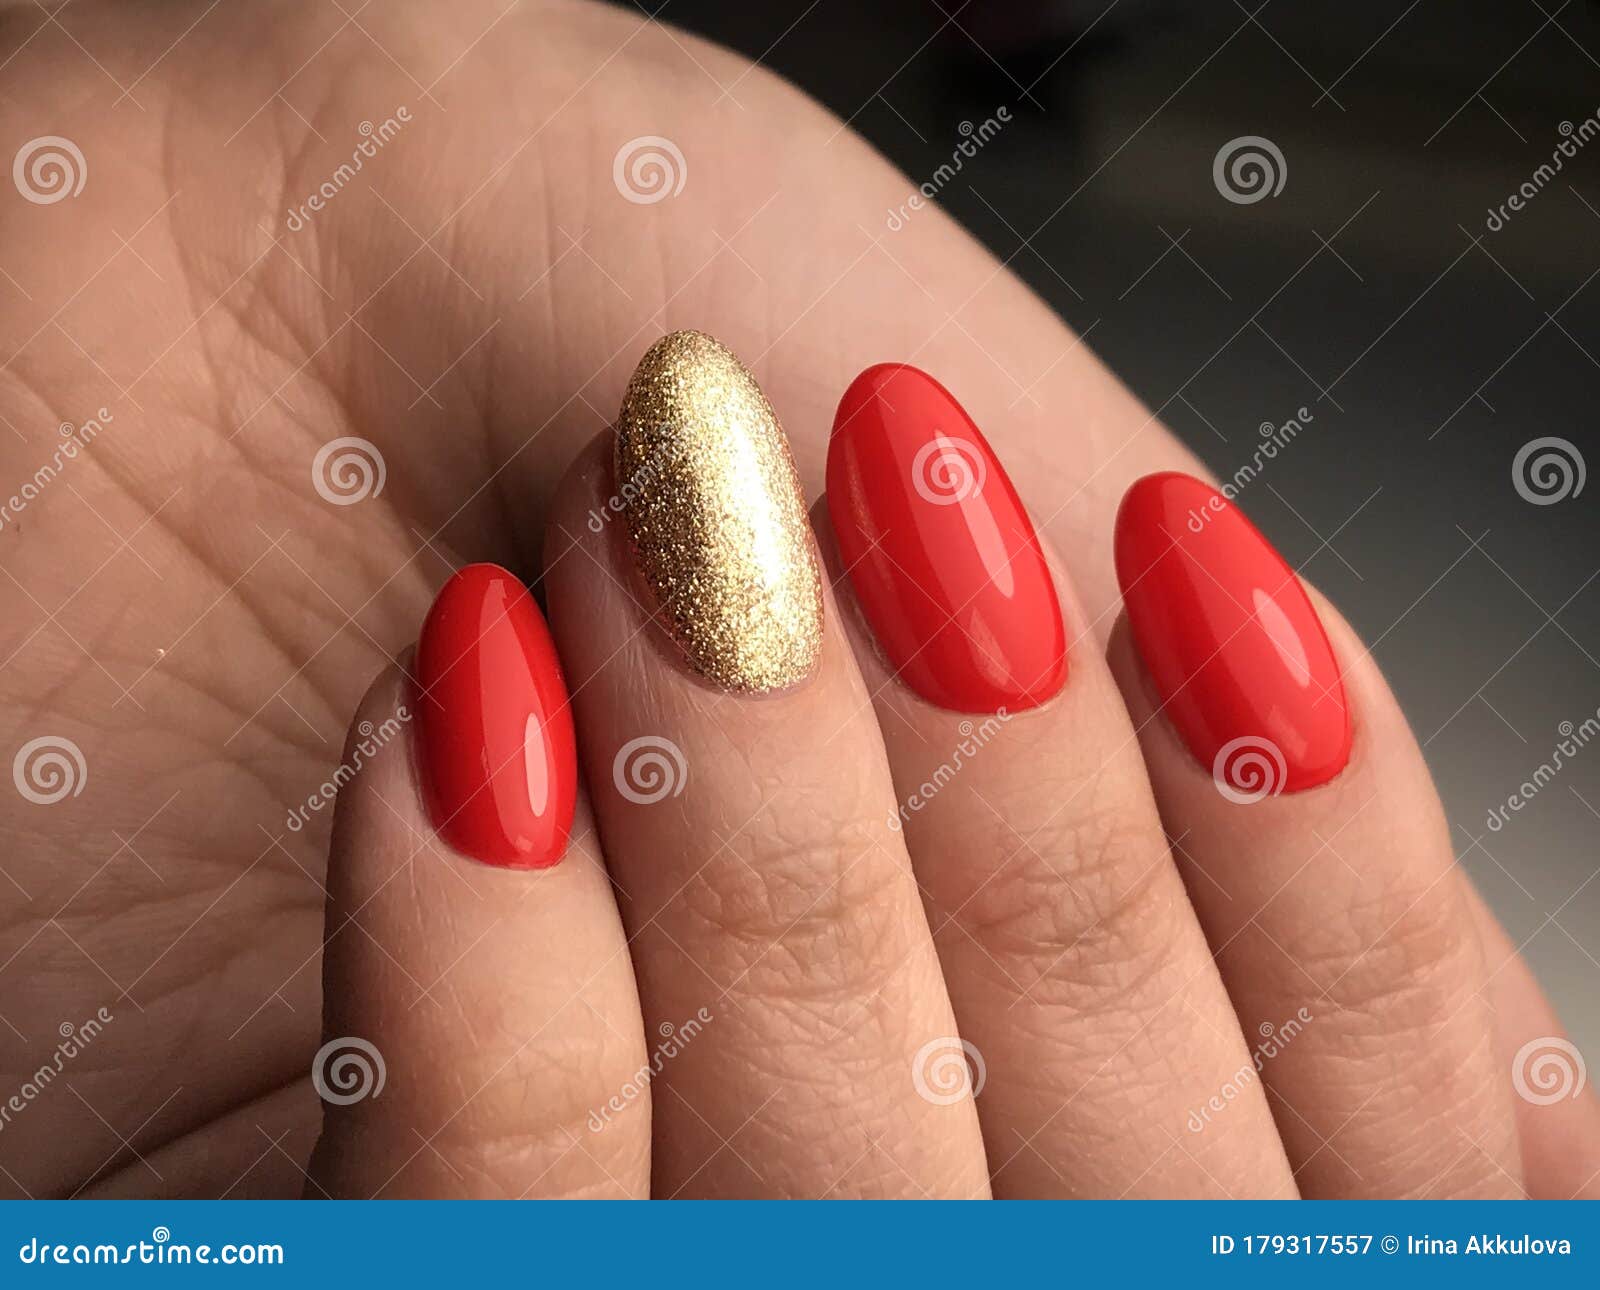 Hot red nail gel polish stock image. Image of finger - 179317557